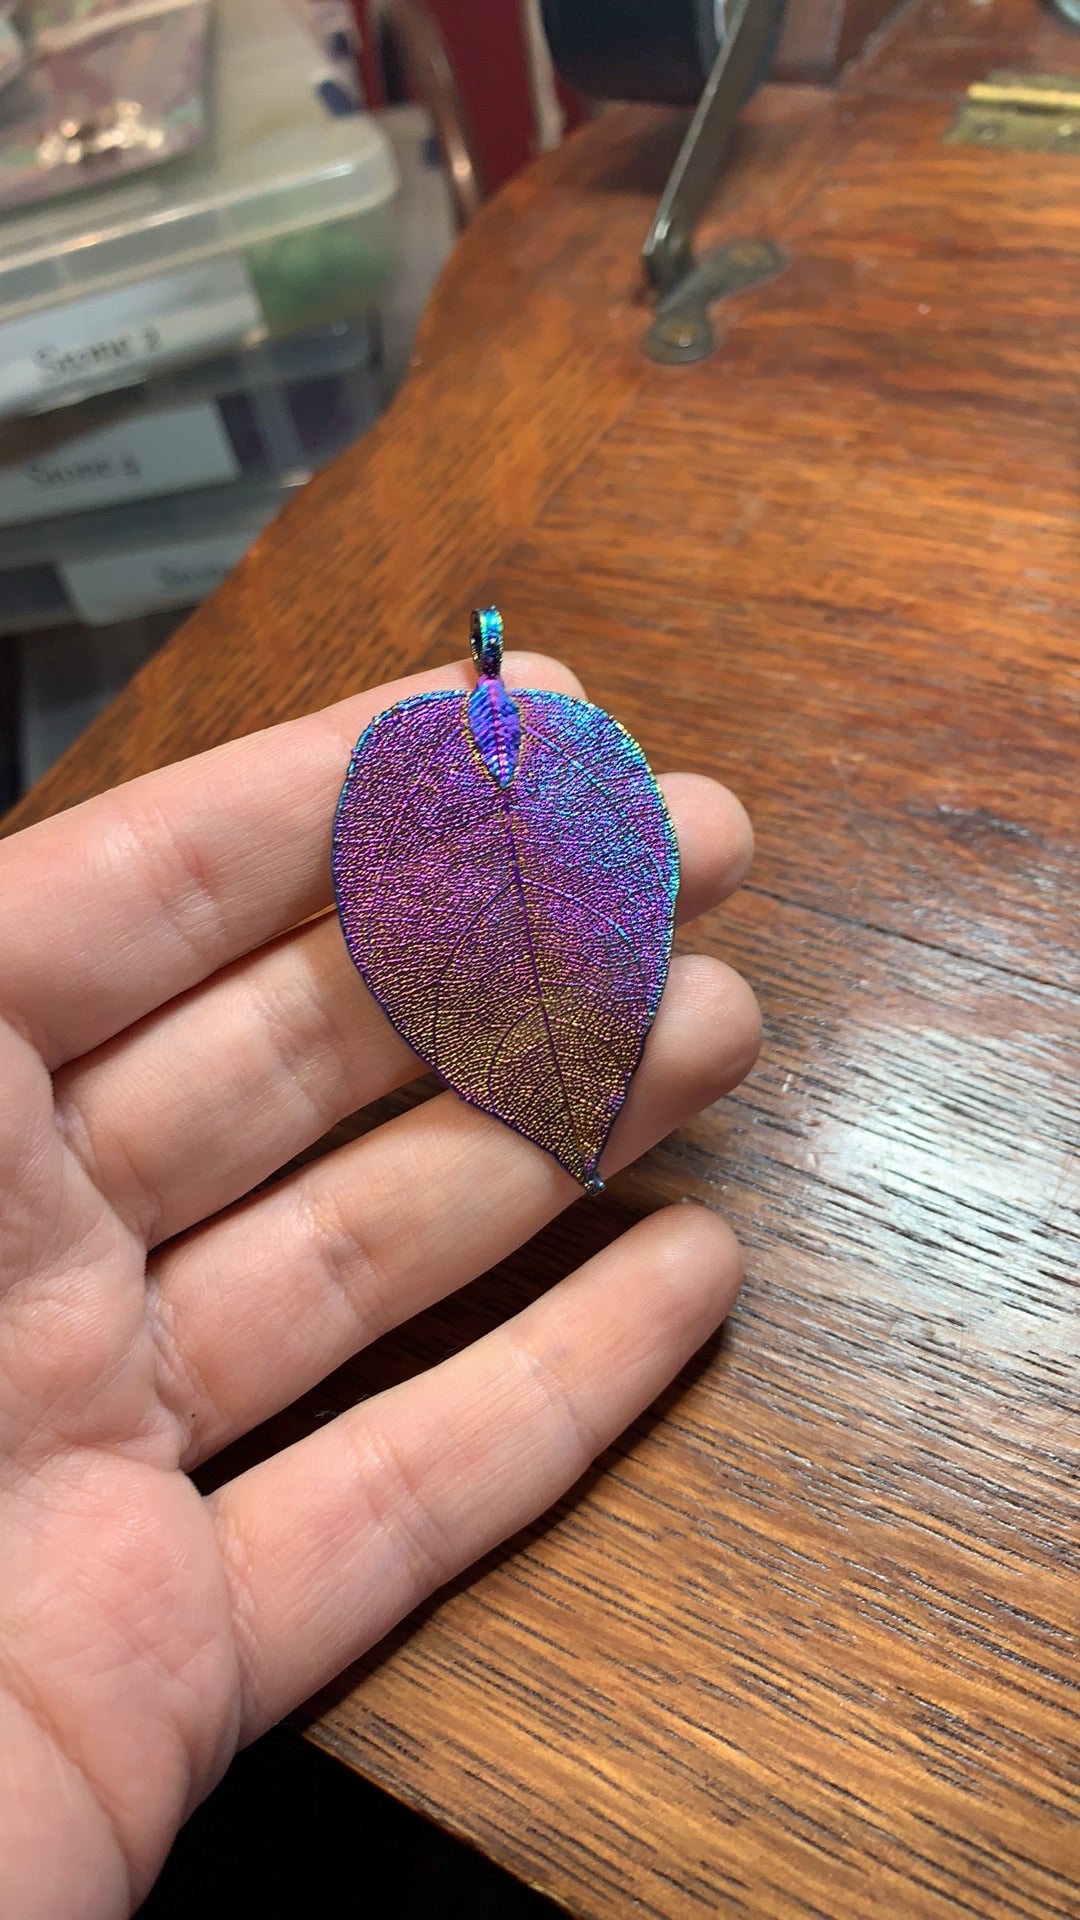 Leaf pendant and boulder opal earrings